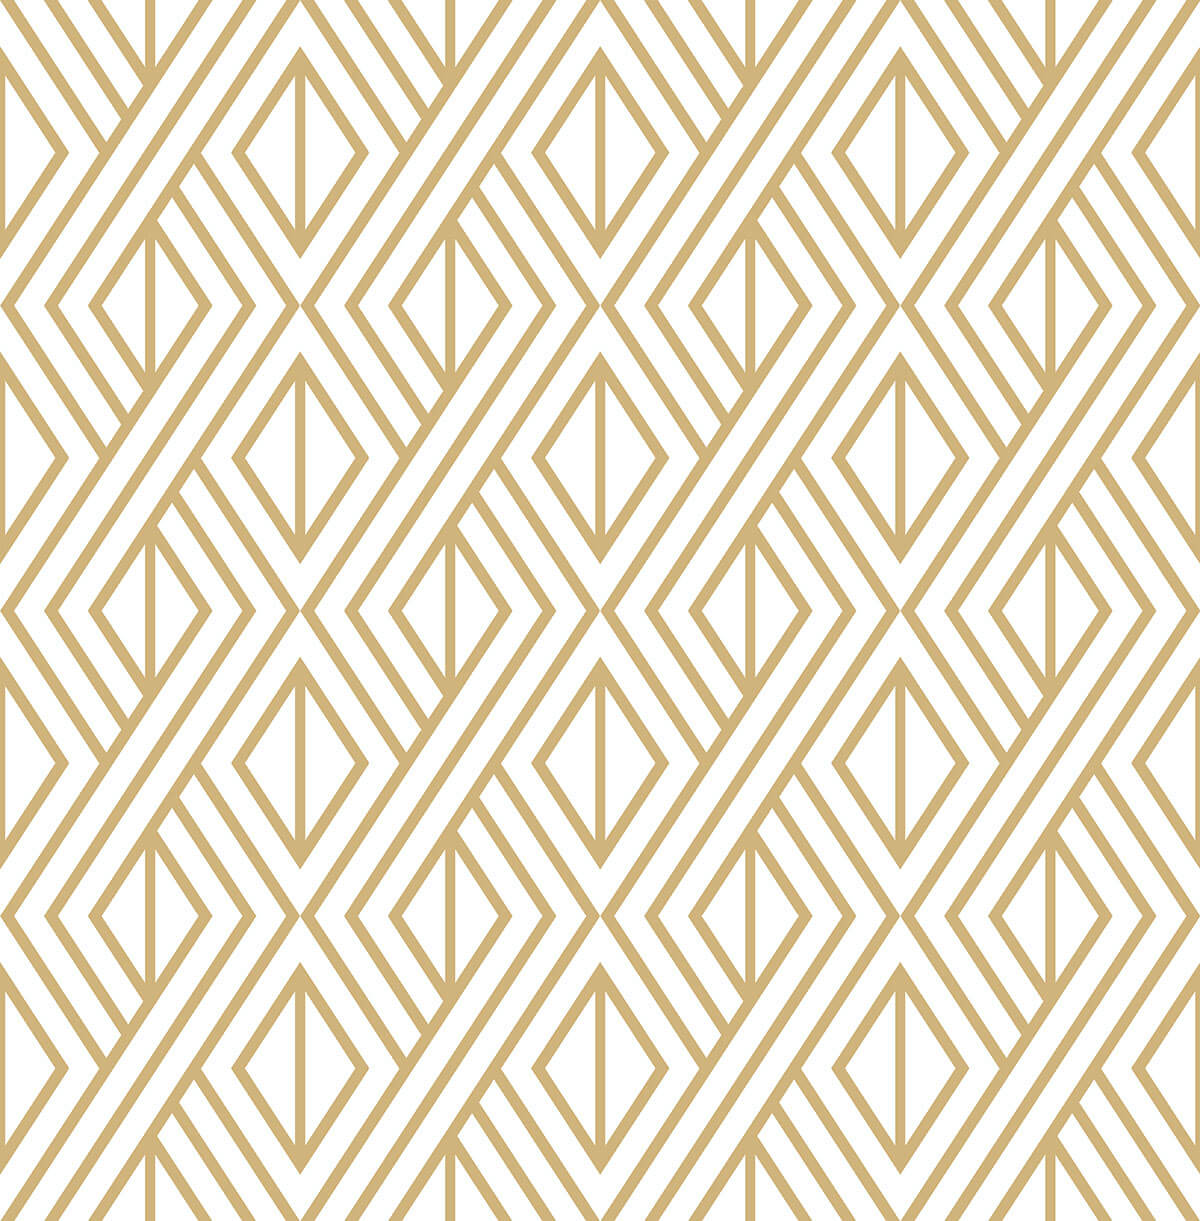 NextWall Diamond Geometric Peel & Stick Wallpaper - Gold